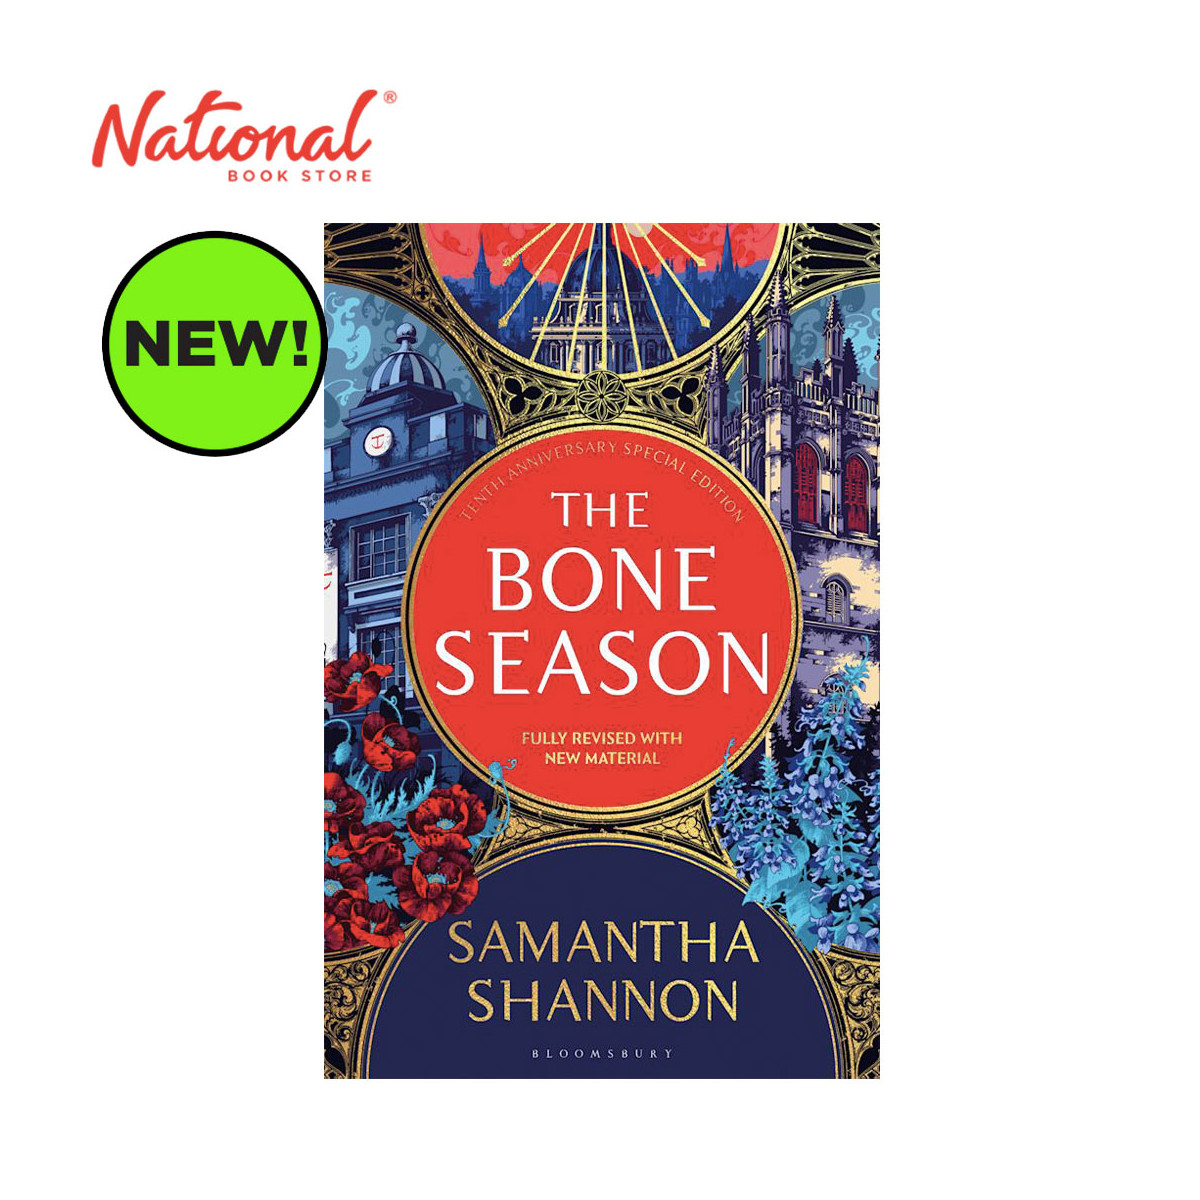 The Bone Season Special Edition by Samantha Shannon - Hardcover - Sci-Fi, Fantasy & Horror